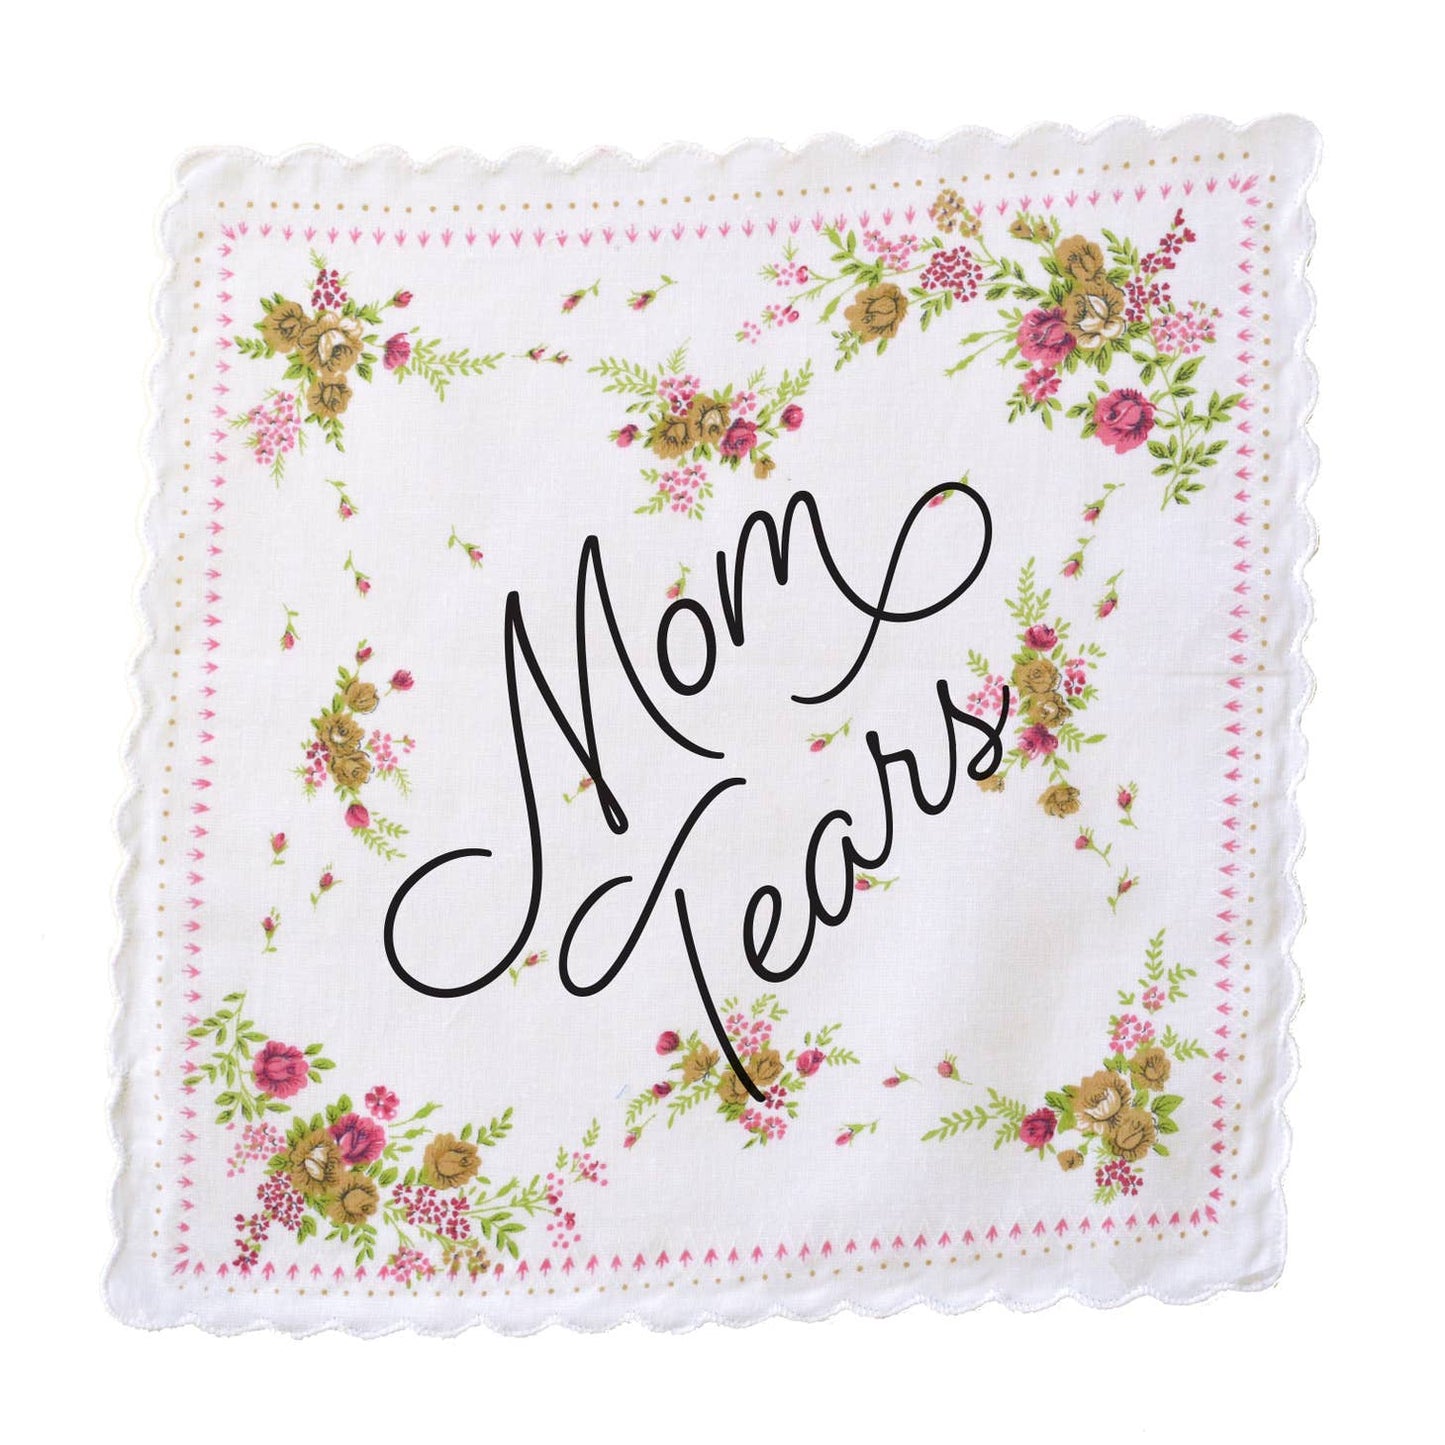 Mom Tears Hankie Wedding Cotton Handkerchief